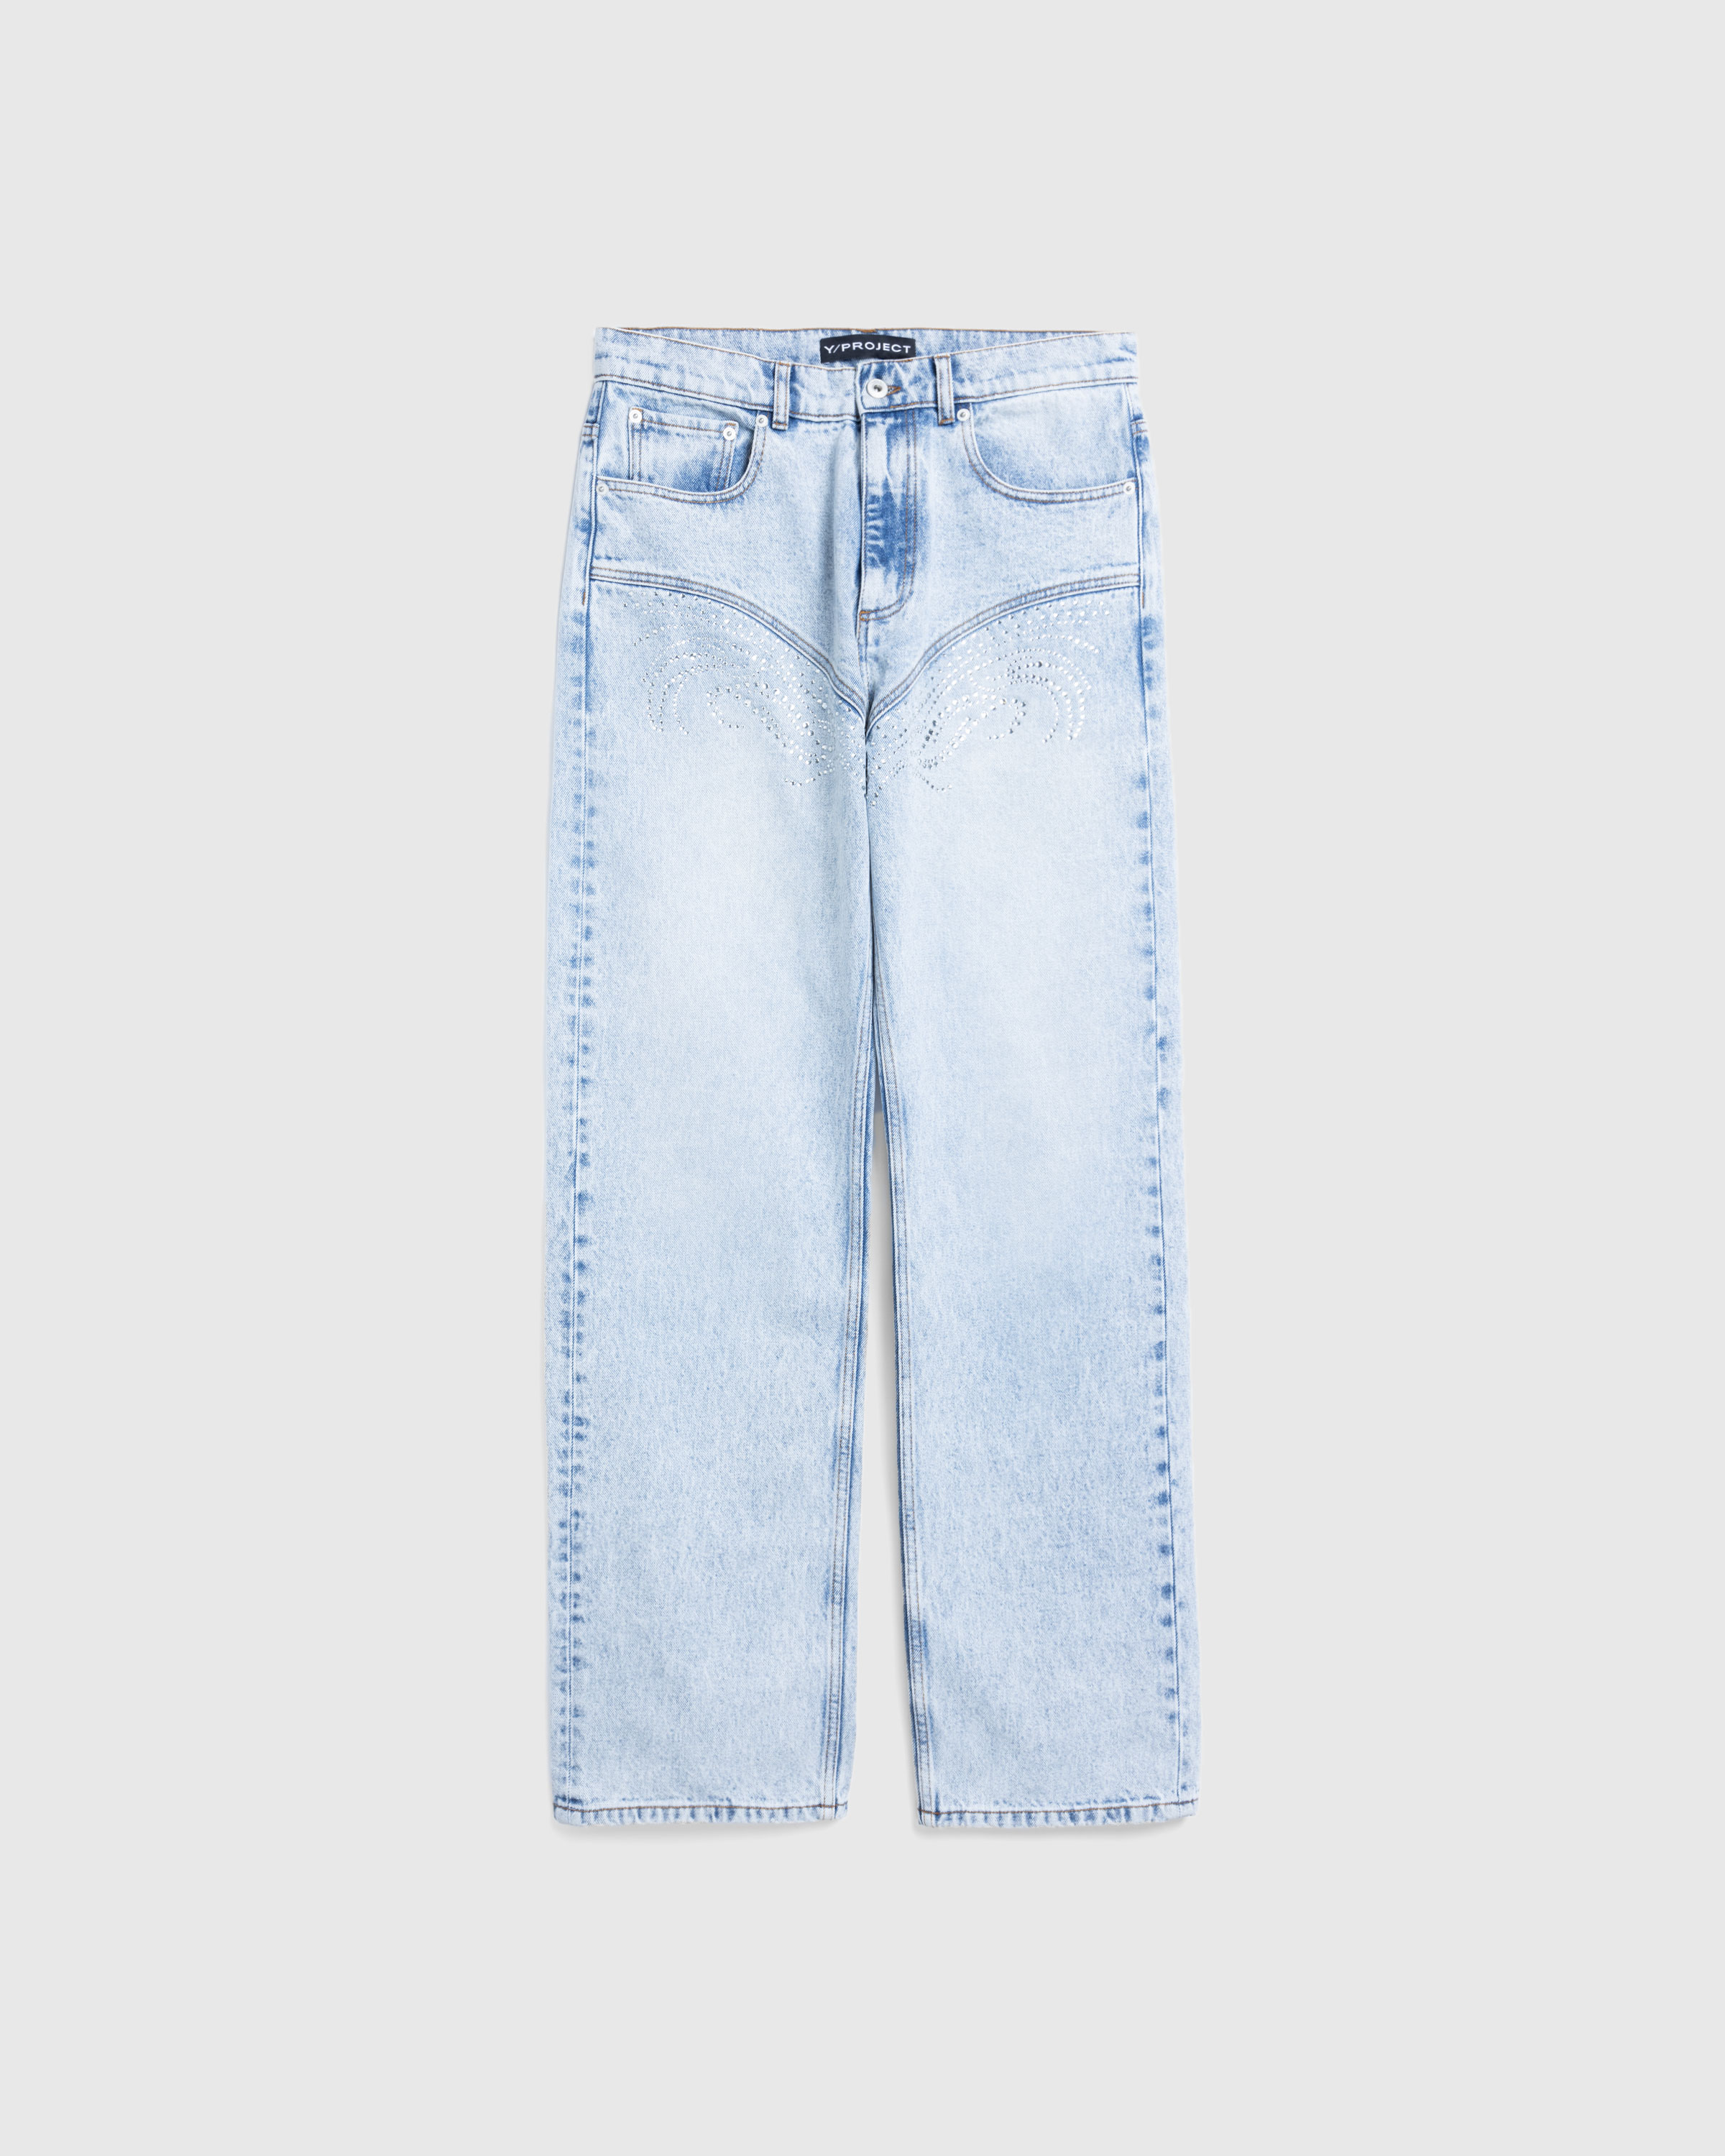 Y/Project – Rhinestone Jeans Blue - Denim - Blue - Image 1